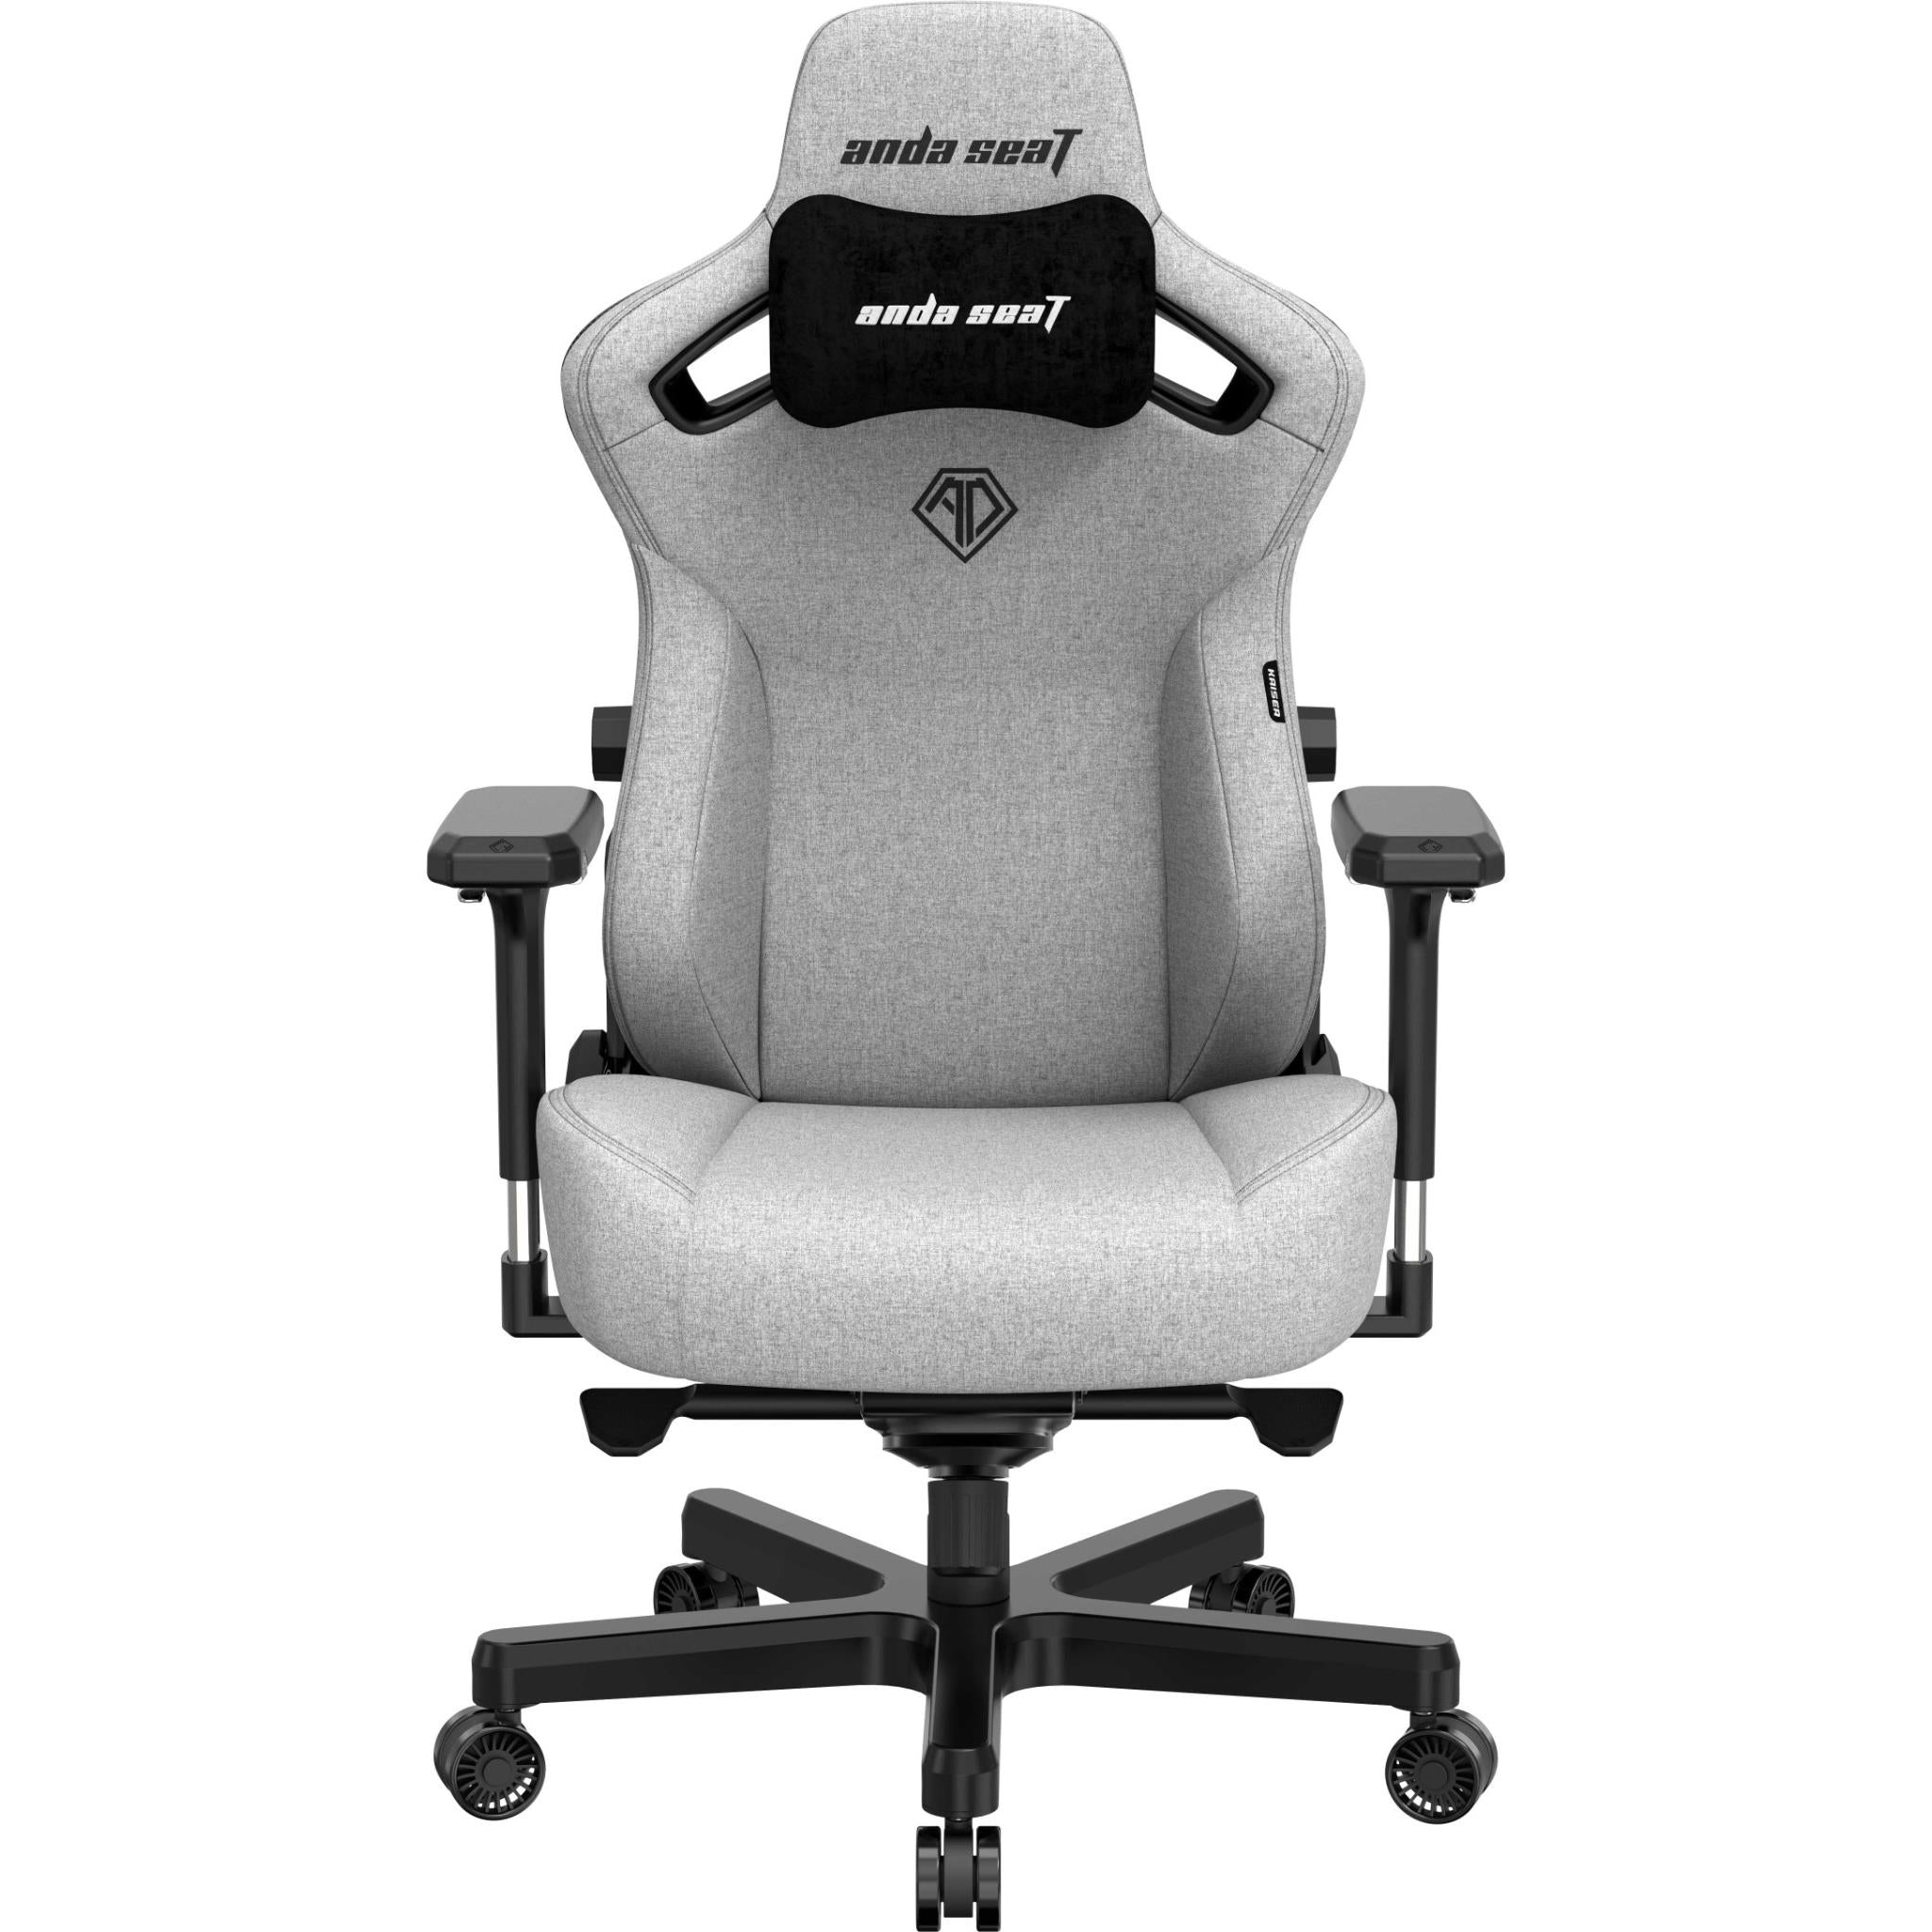 anda seat kaiser 3 series premium gaming chair grey fabric (xl)